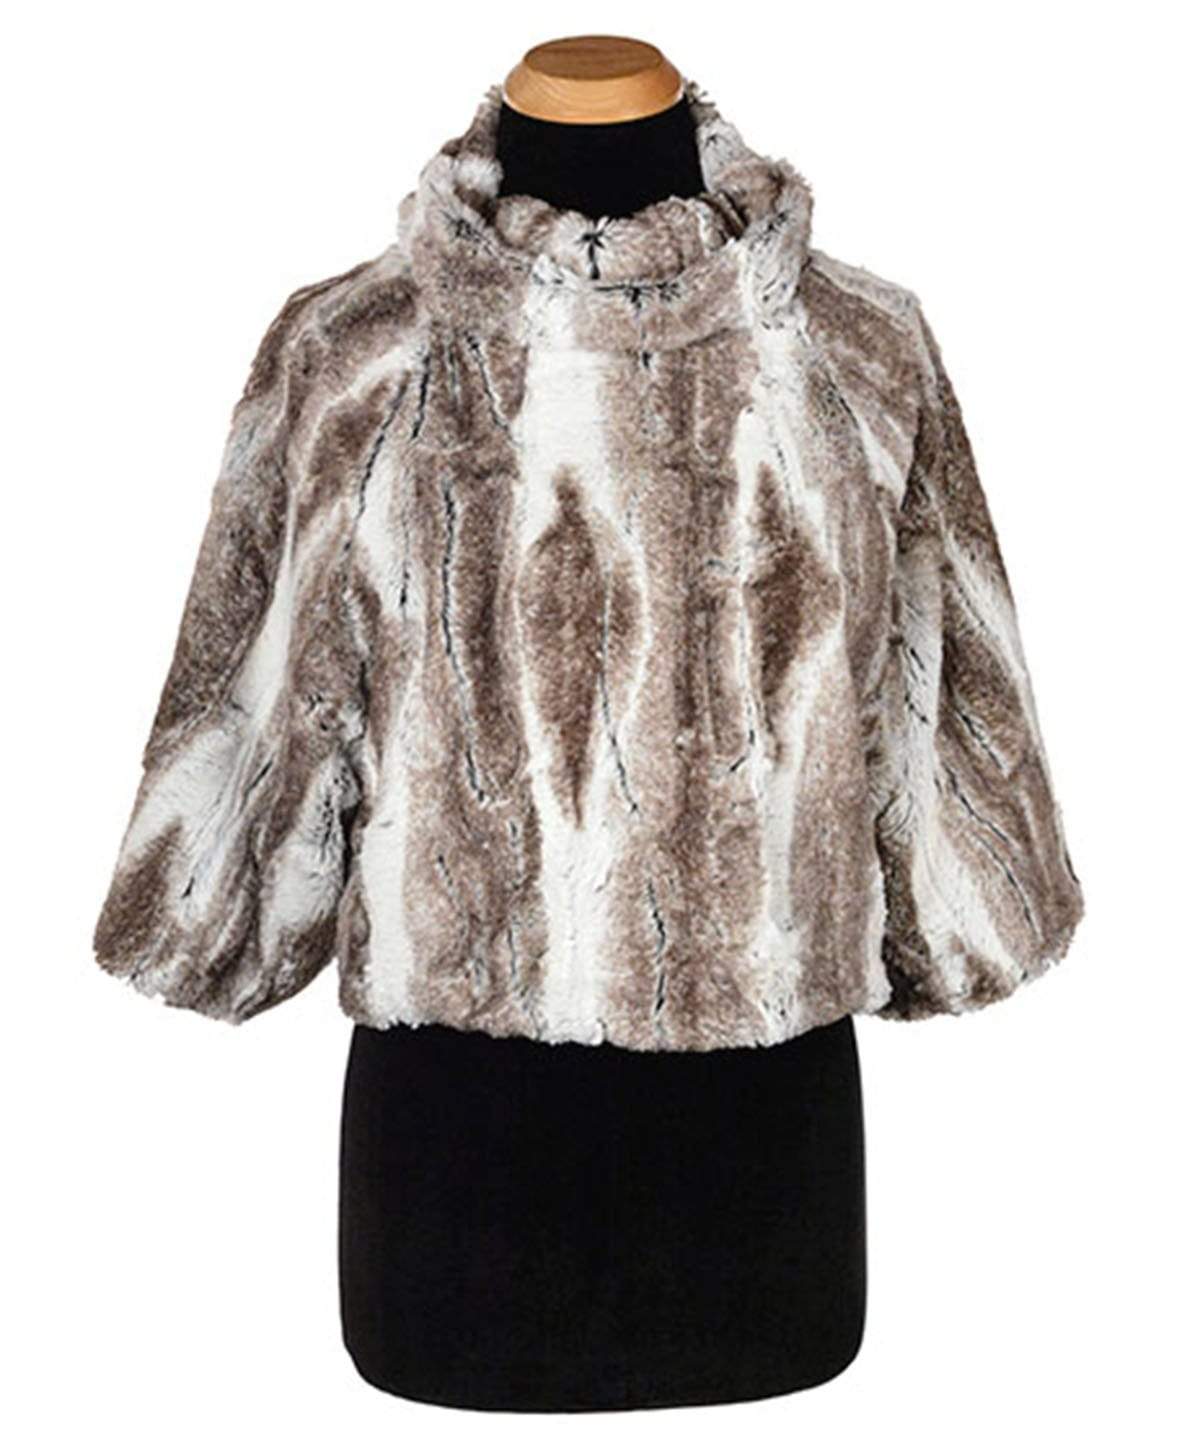 Sweater Top | Luxury Faux Fur Birch Brown, Cream | Handmade By Pandemonium Millinery | Seattle WA USA